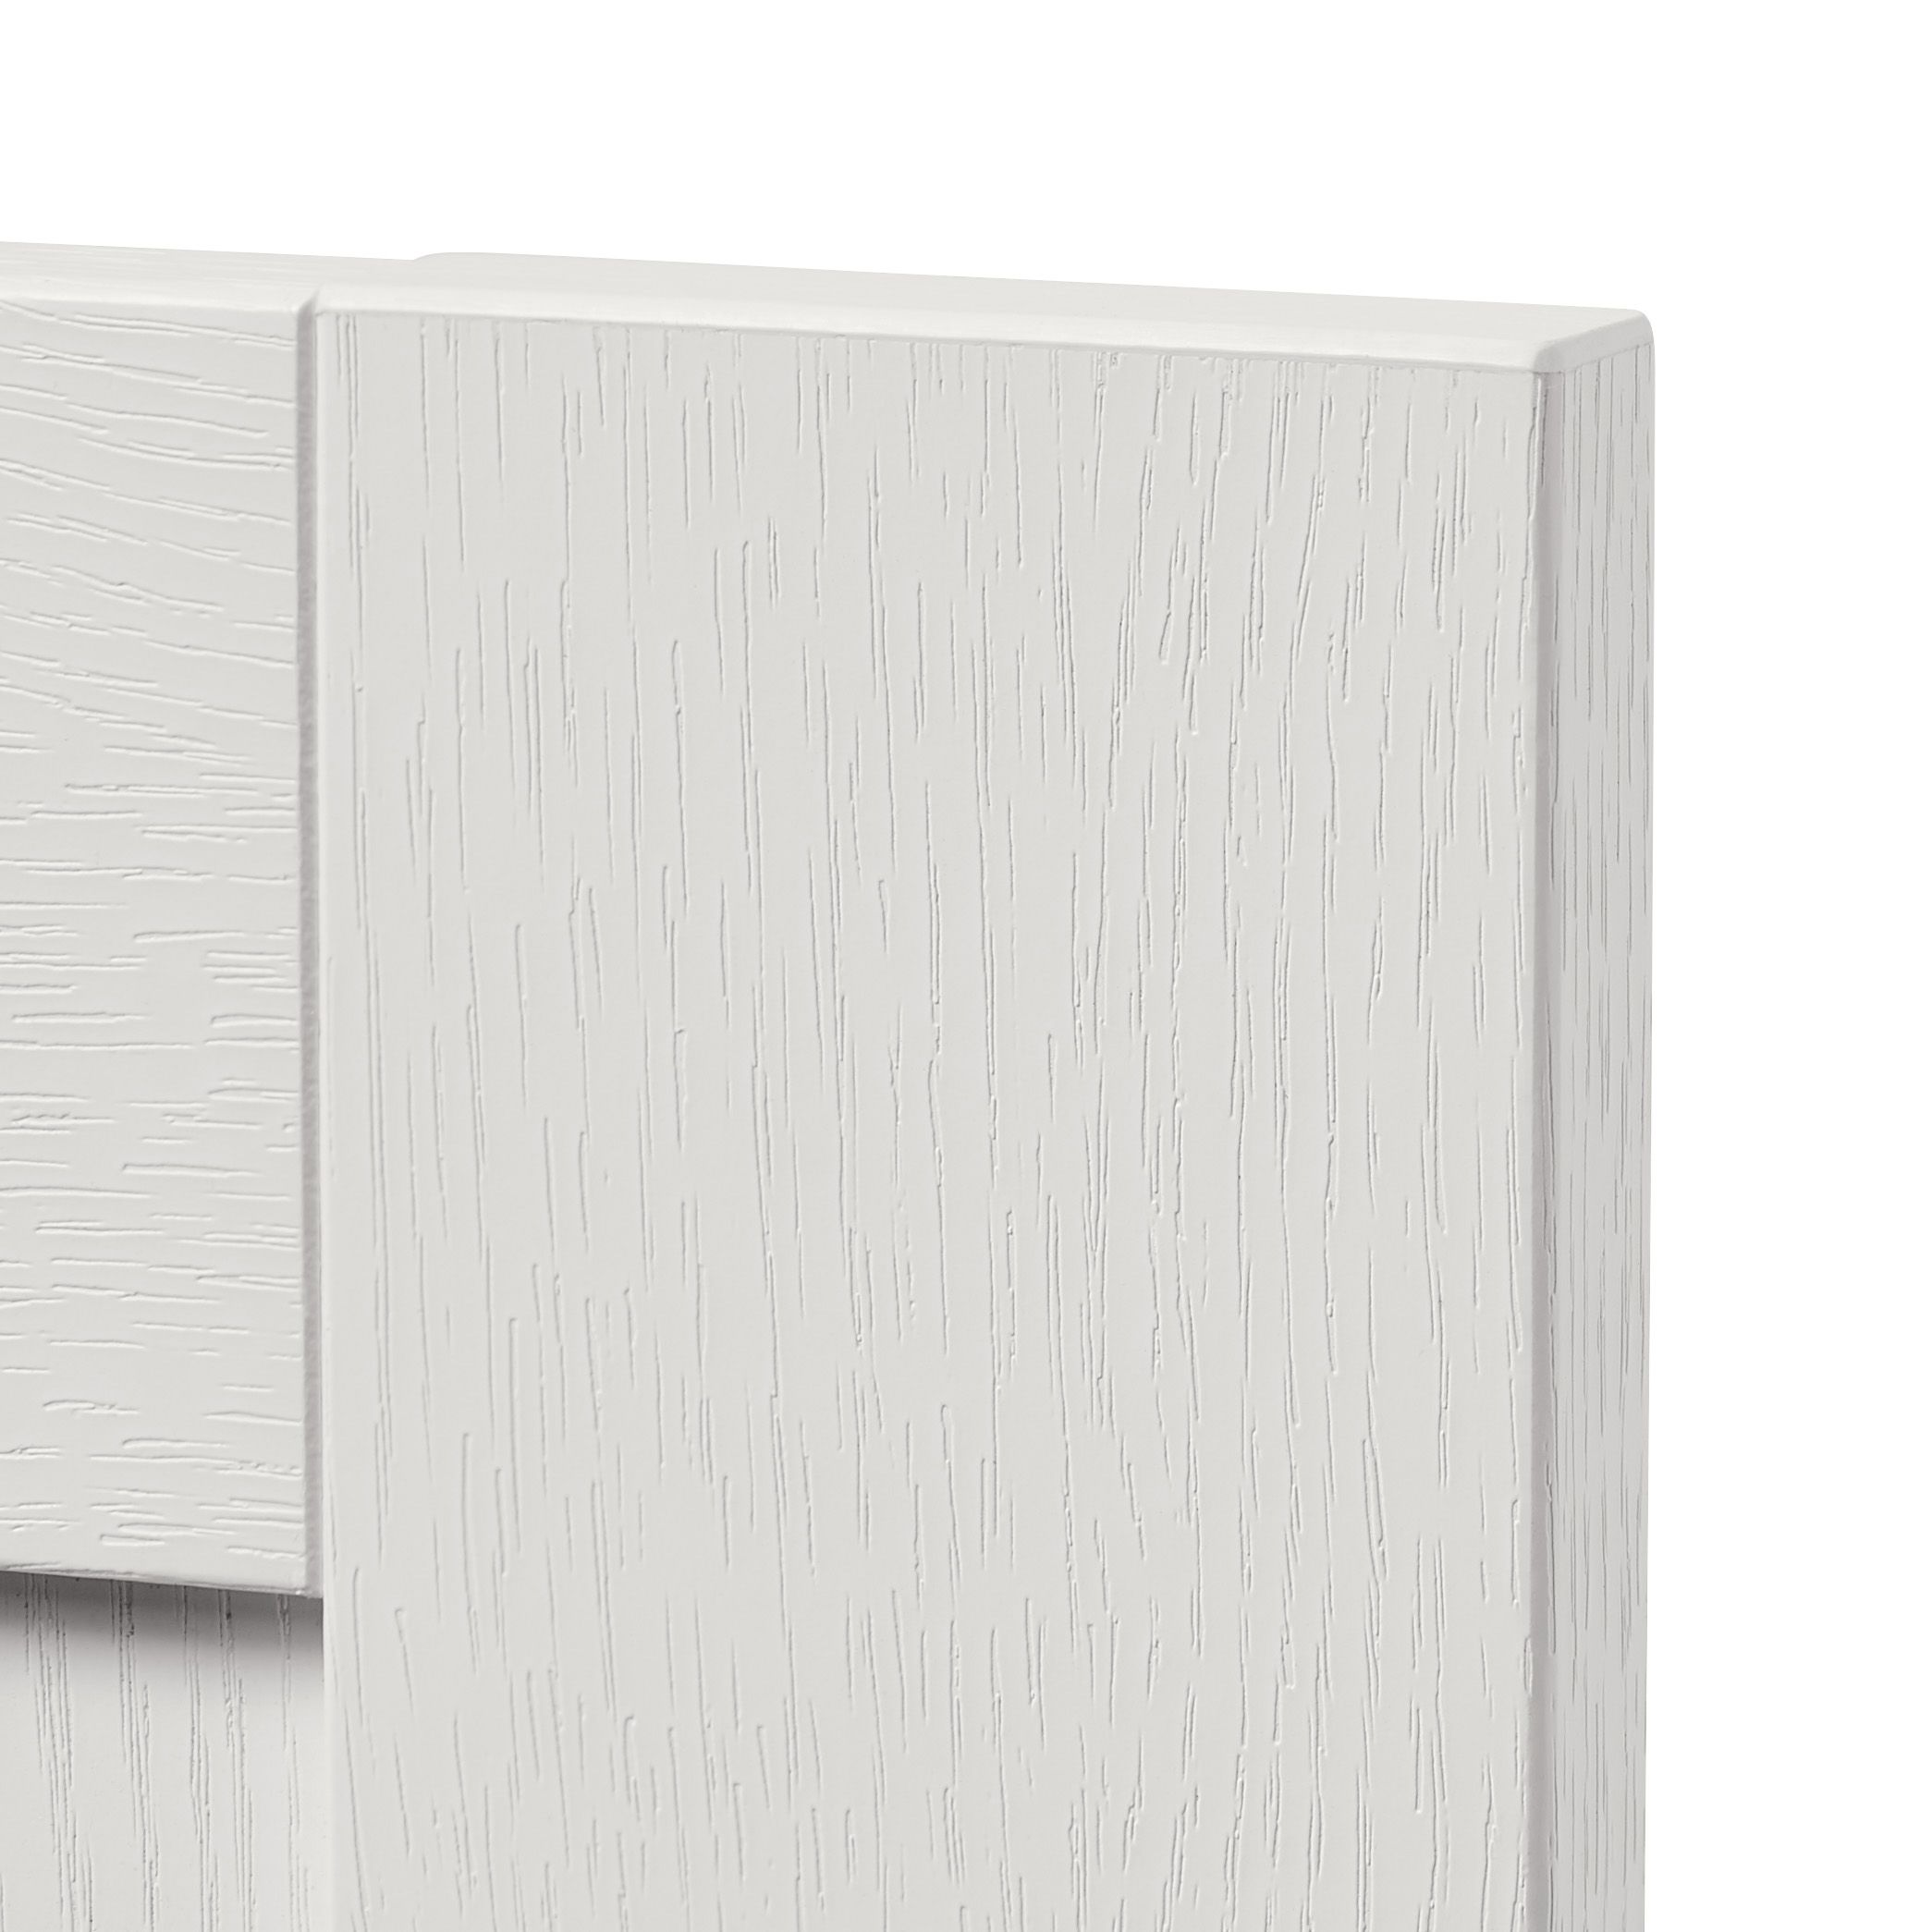 GoodHome Alpinia Matt ivory painted wood effect shaker Tall larder Cabinet door (W)500mm (H)1467mm (T)18mm